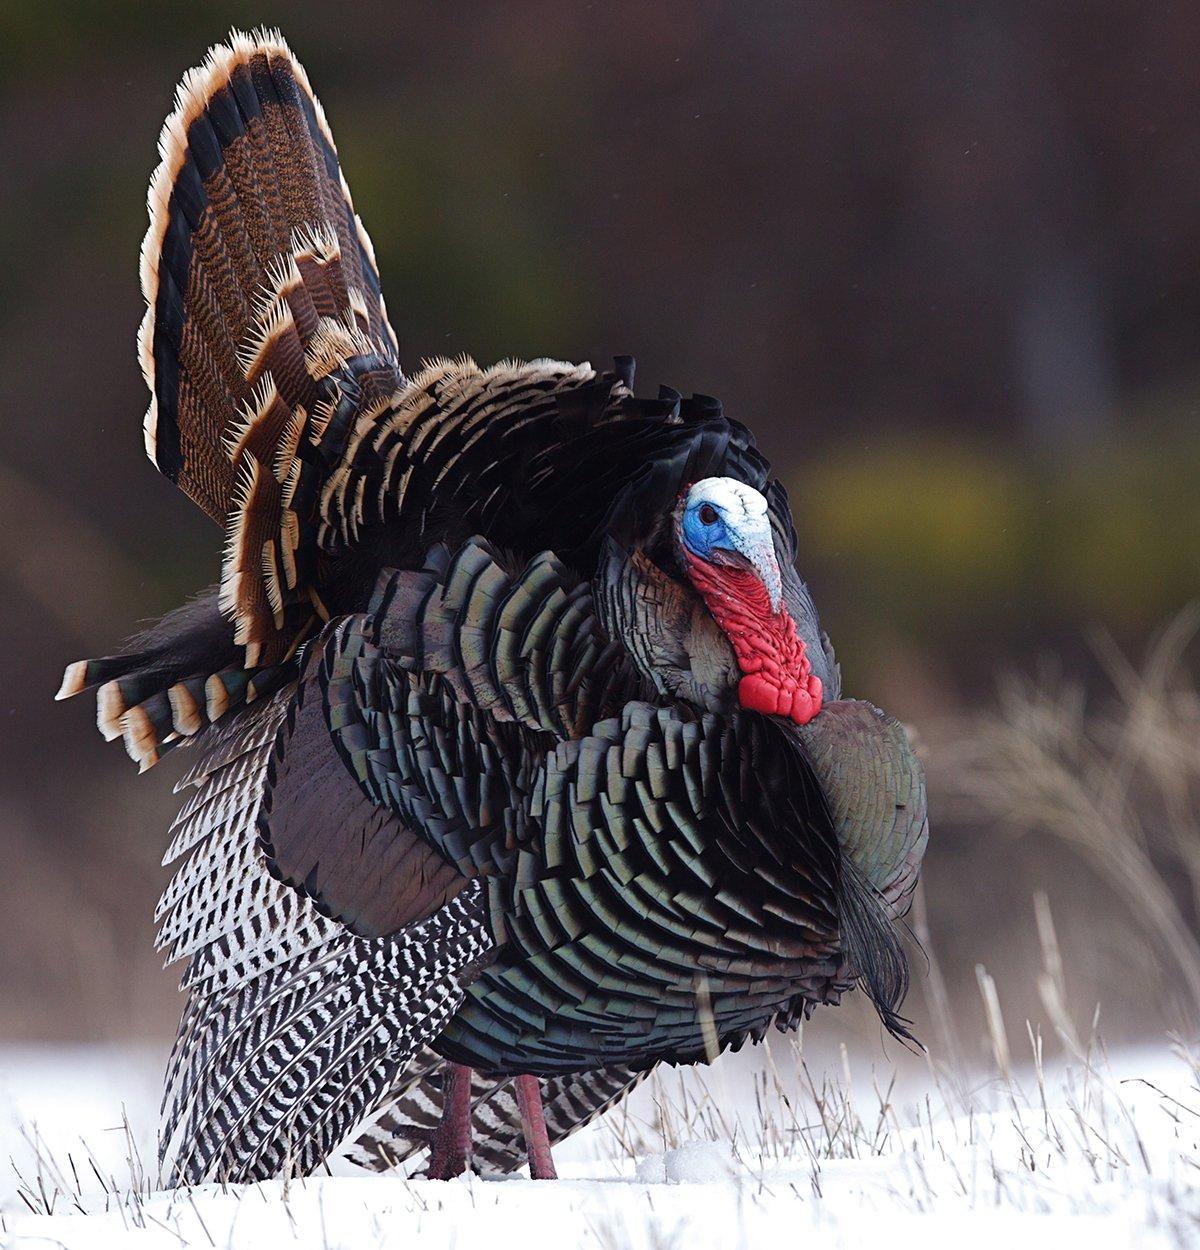 Turkey hunting in Washington. Image by Tom Reichner / Shutterstock